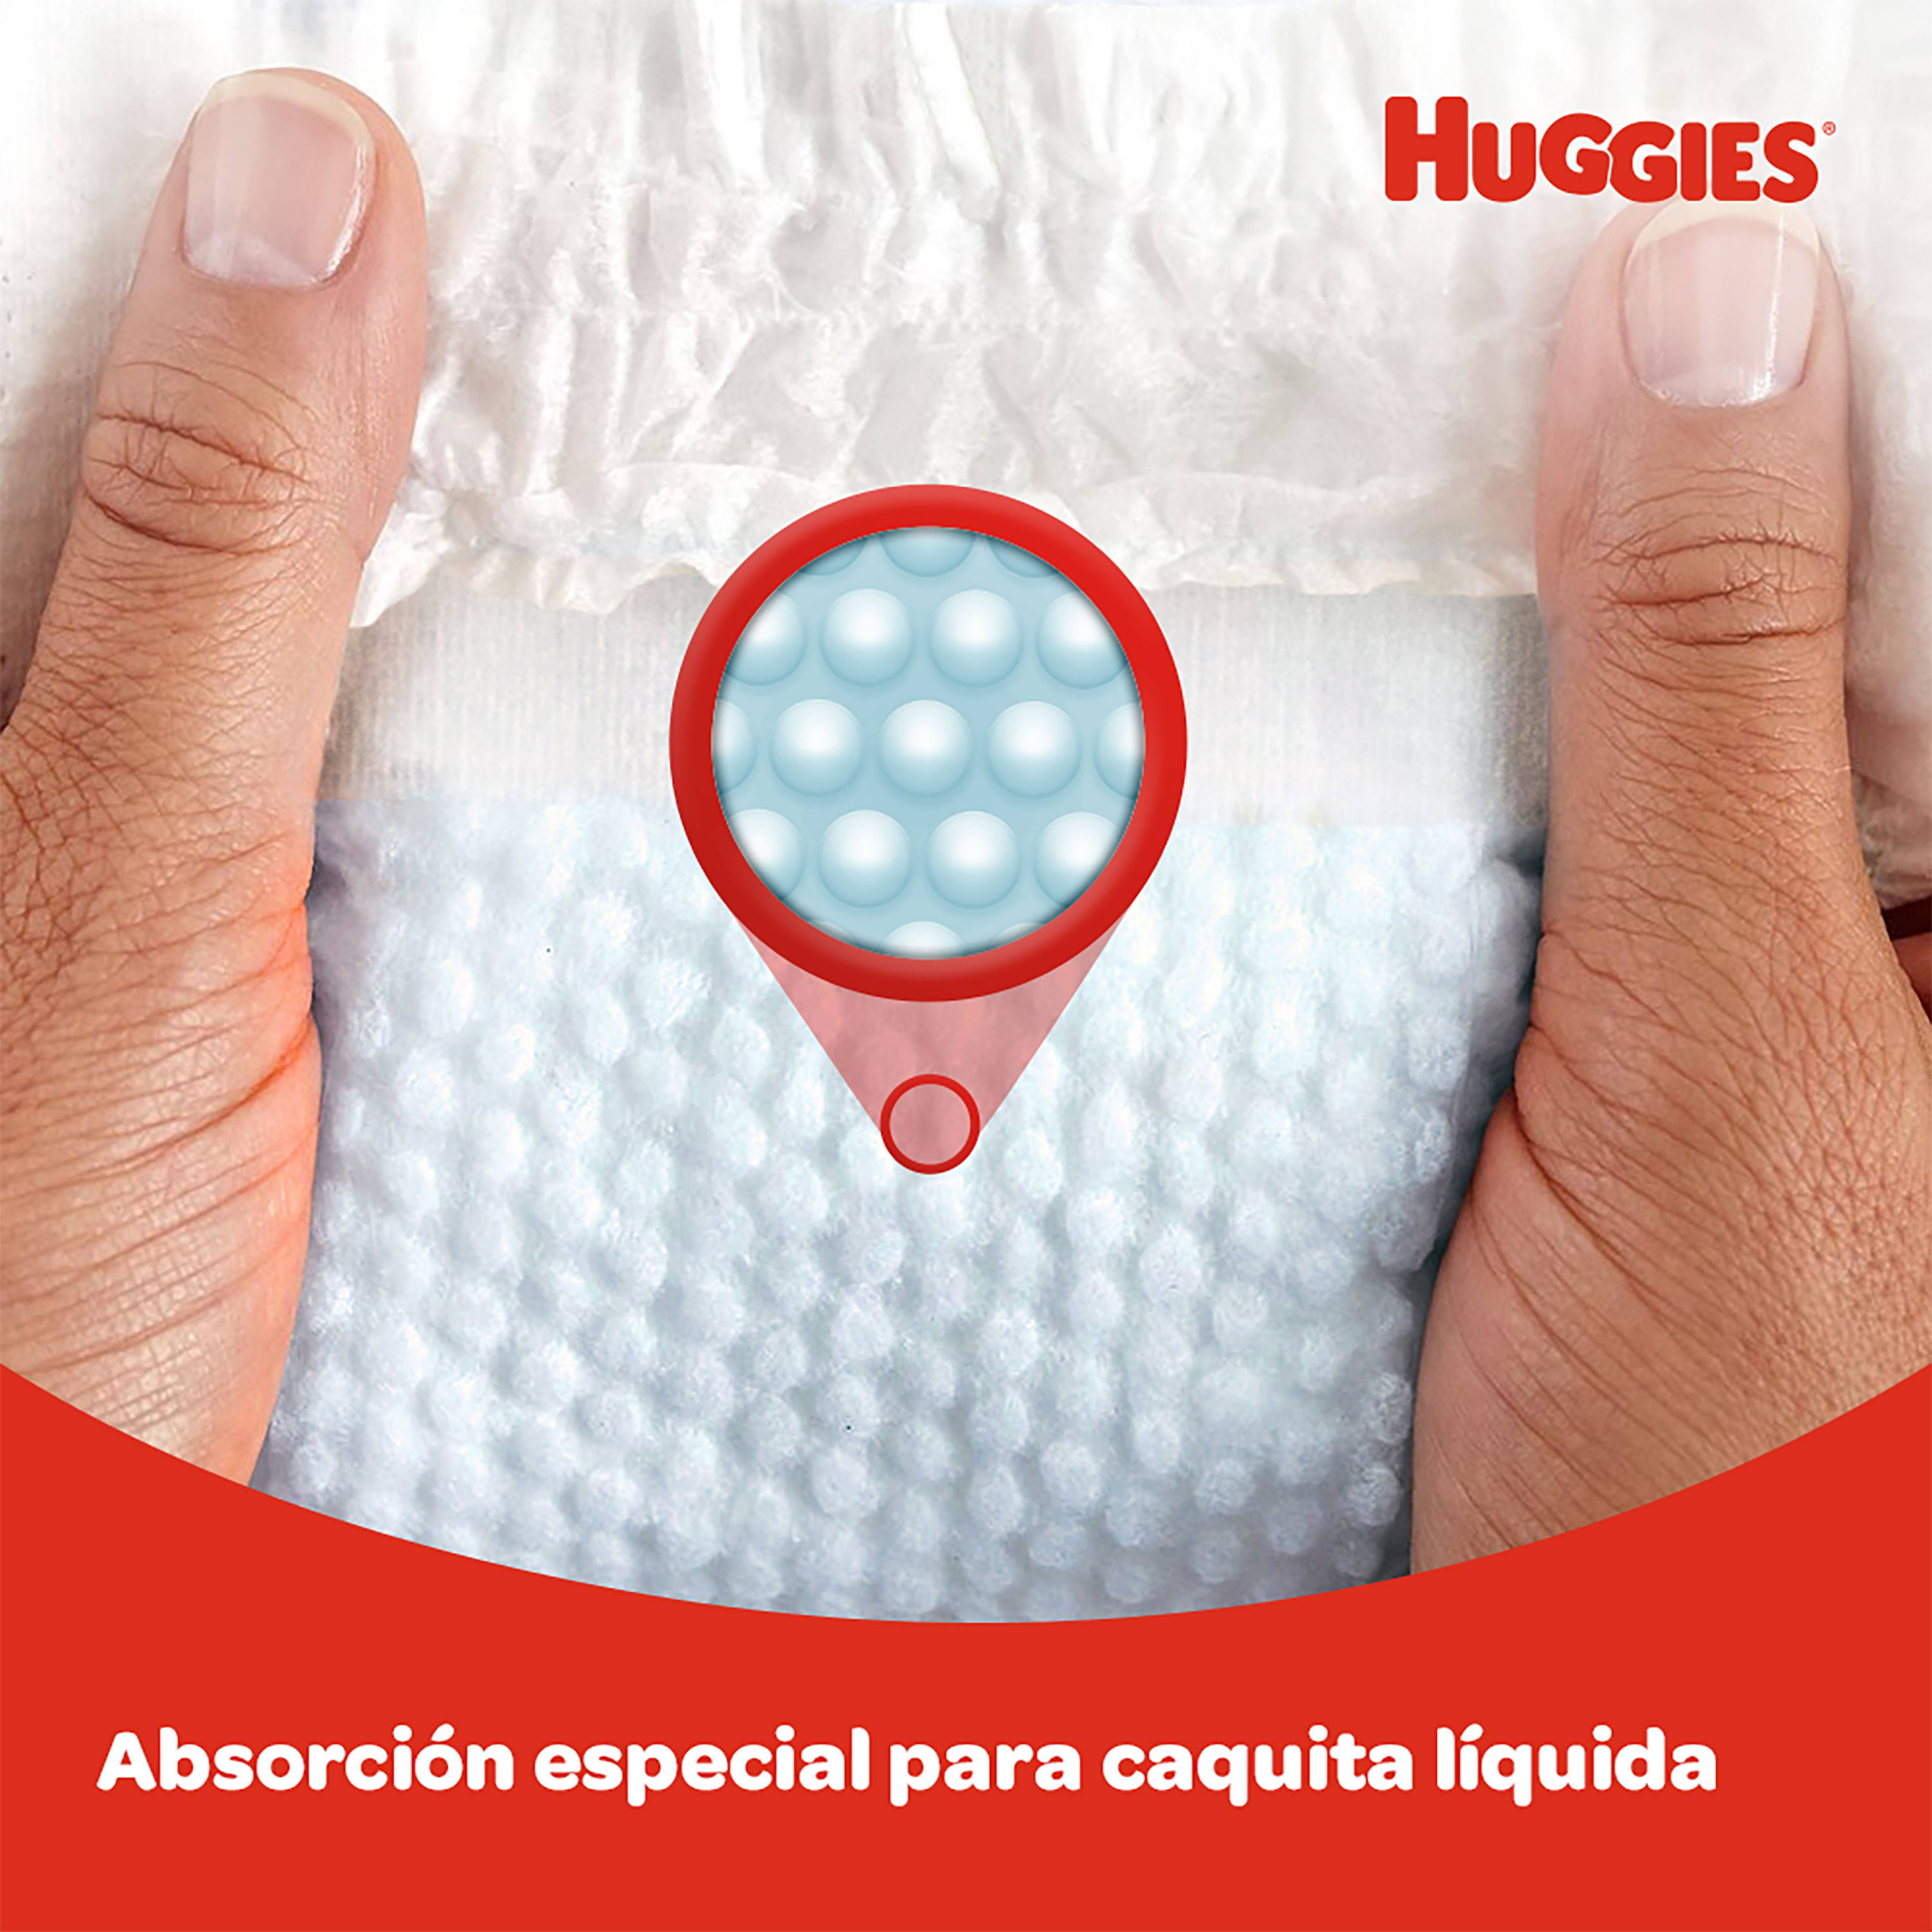 Huggies® Natural Care Recién Nacido